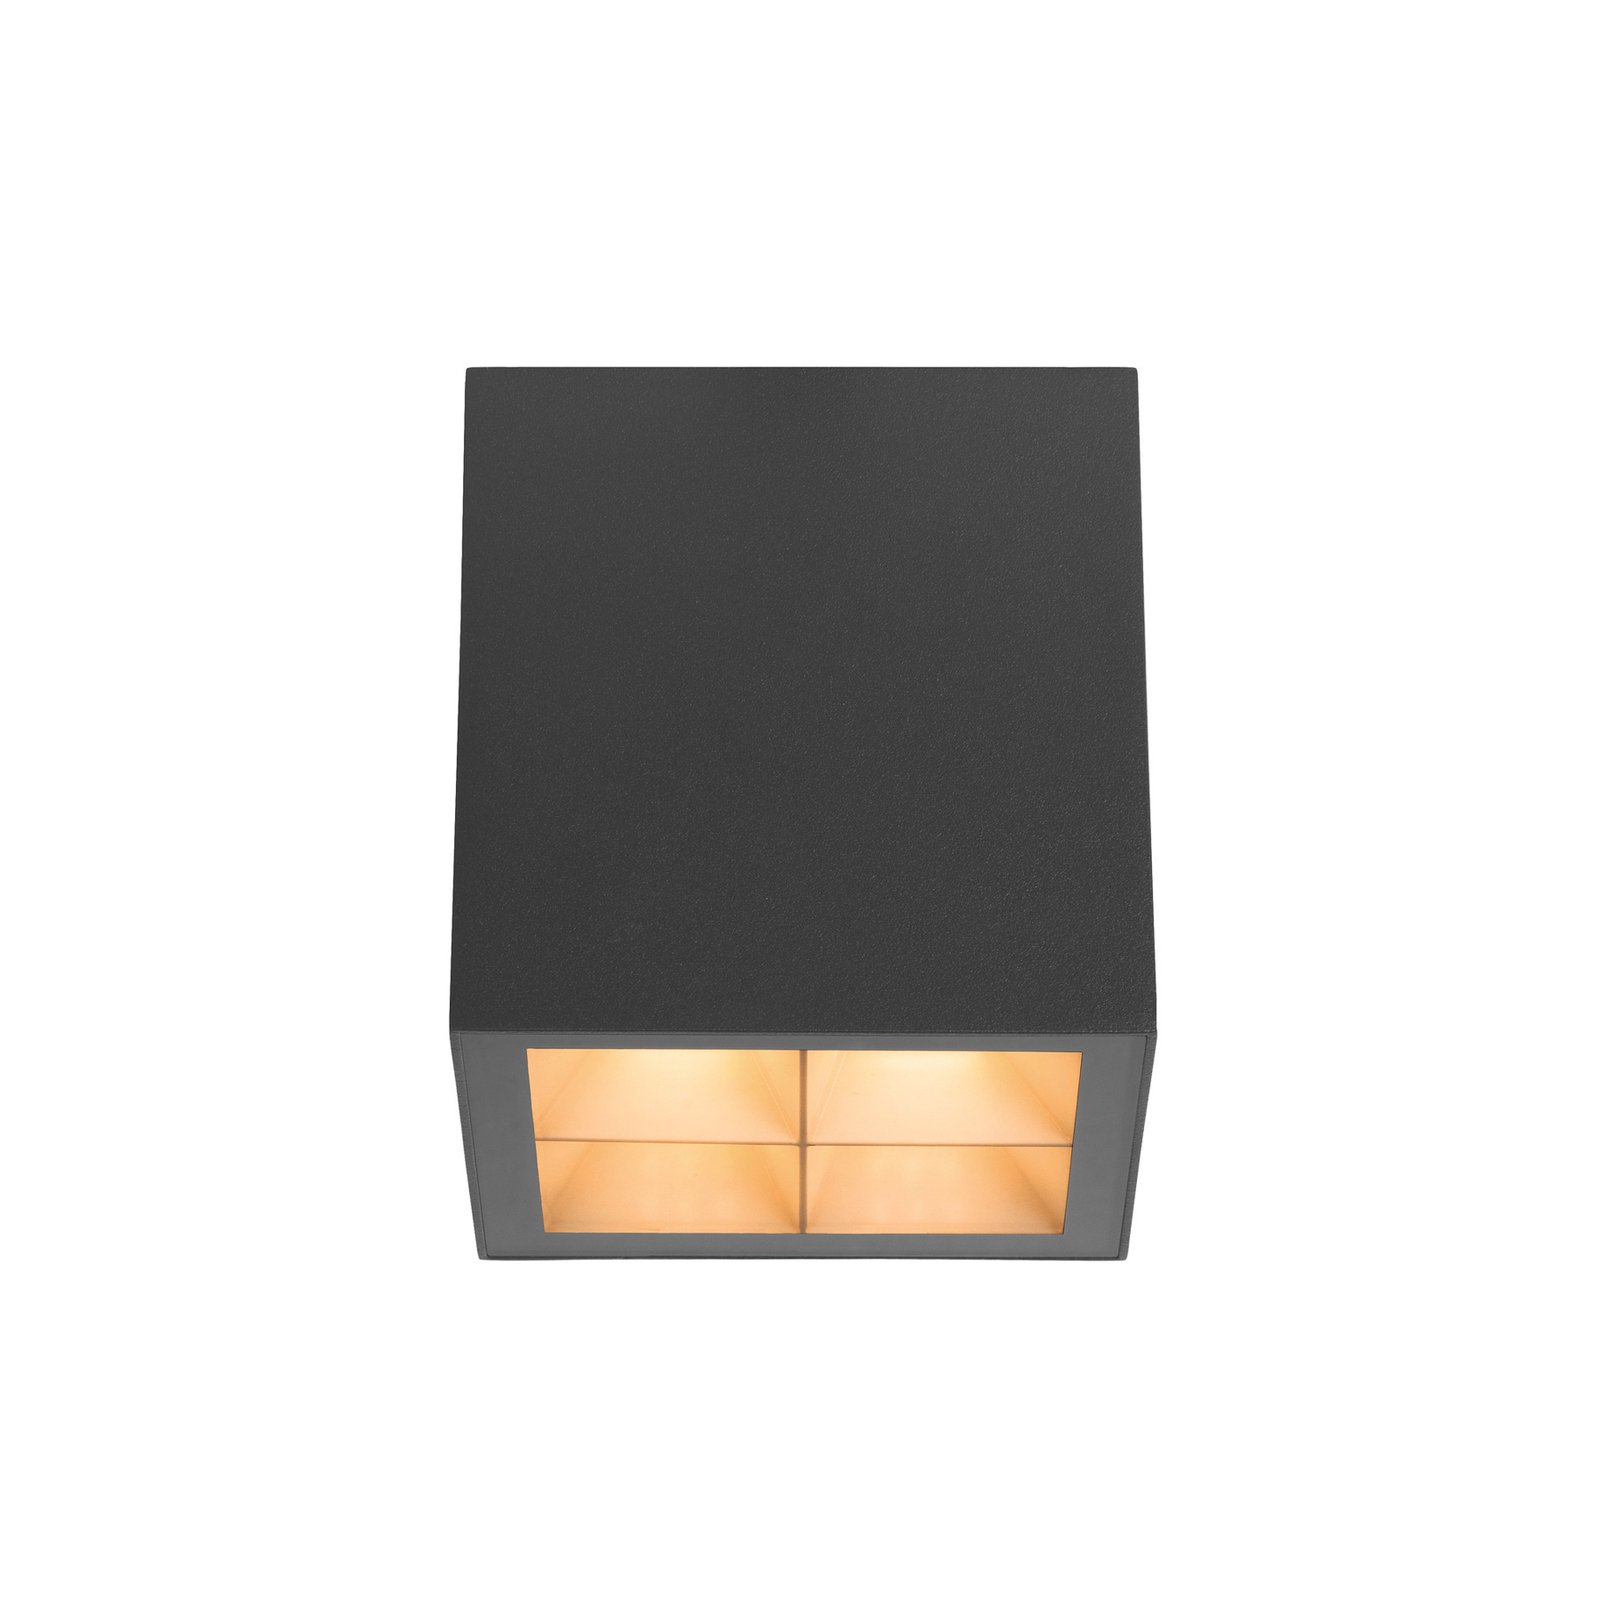 SLV Plafonnier LED S-Cube, anthracite, aluminium, longueur 9,5 cm